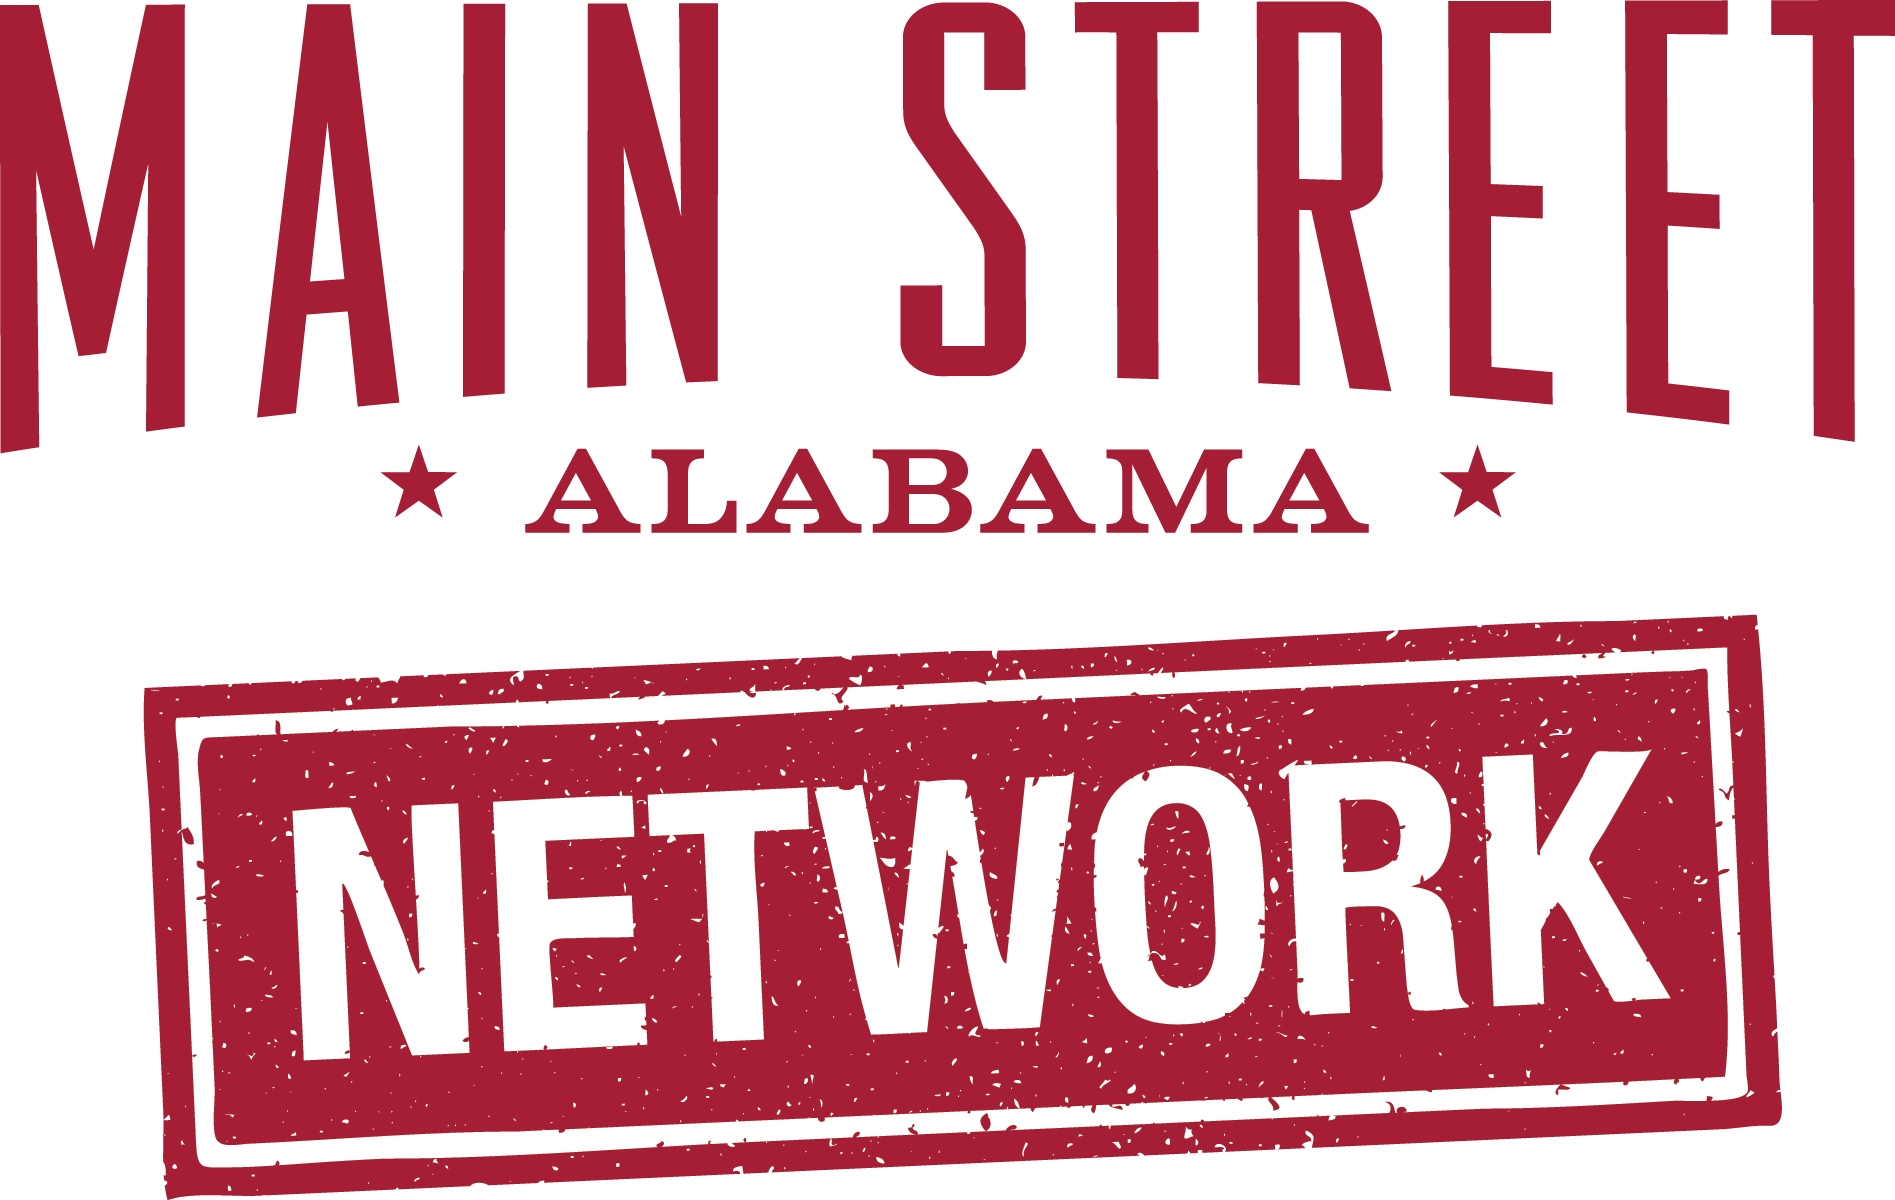 Network Logo